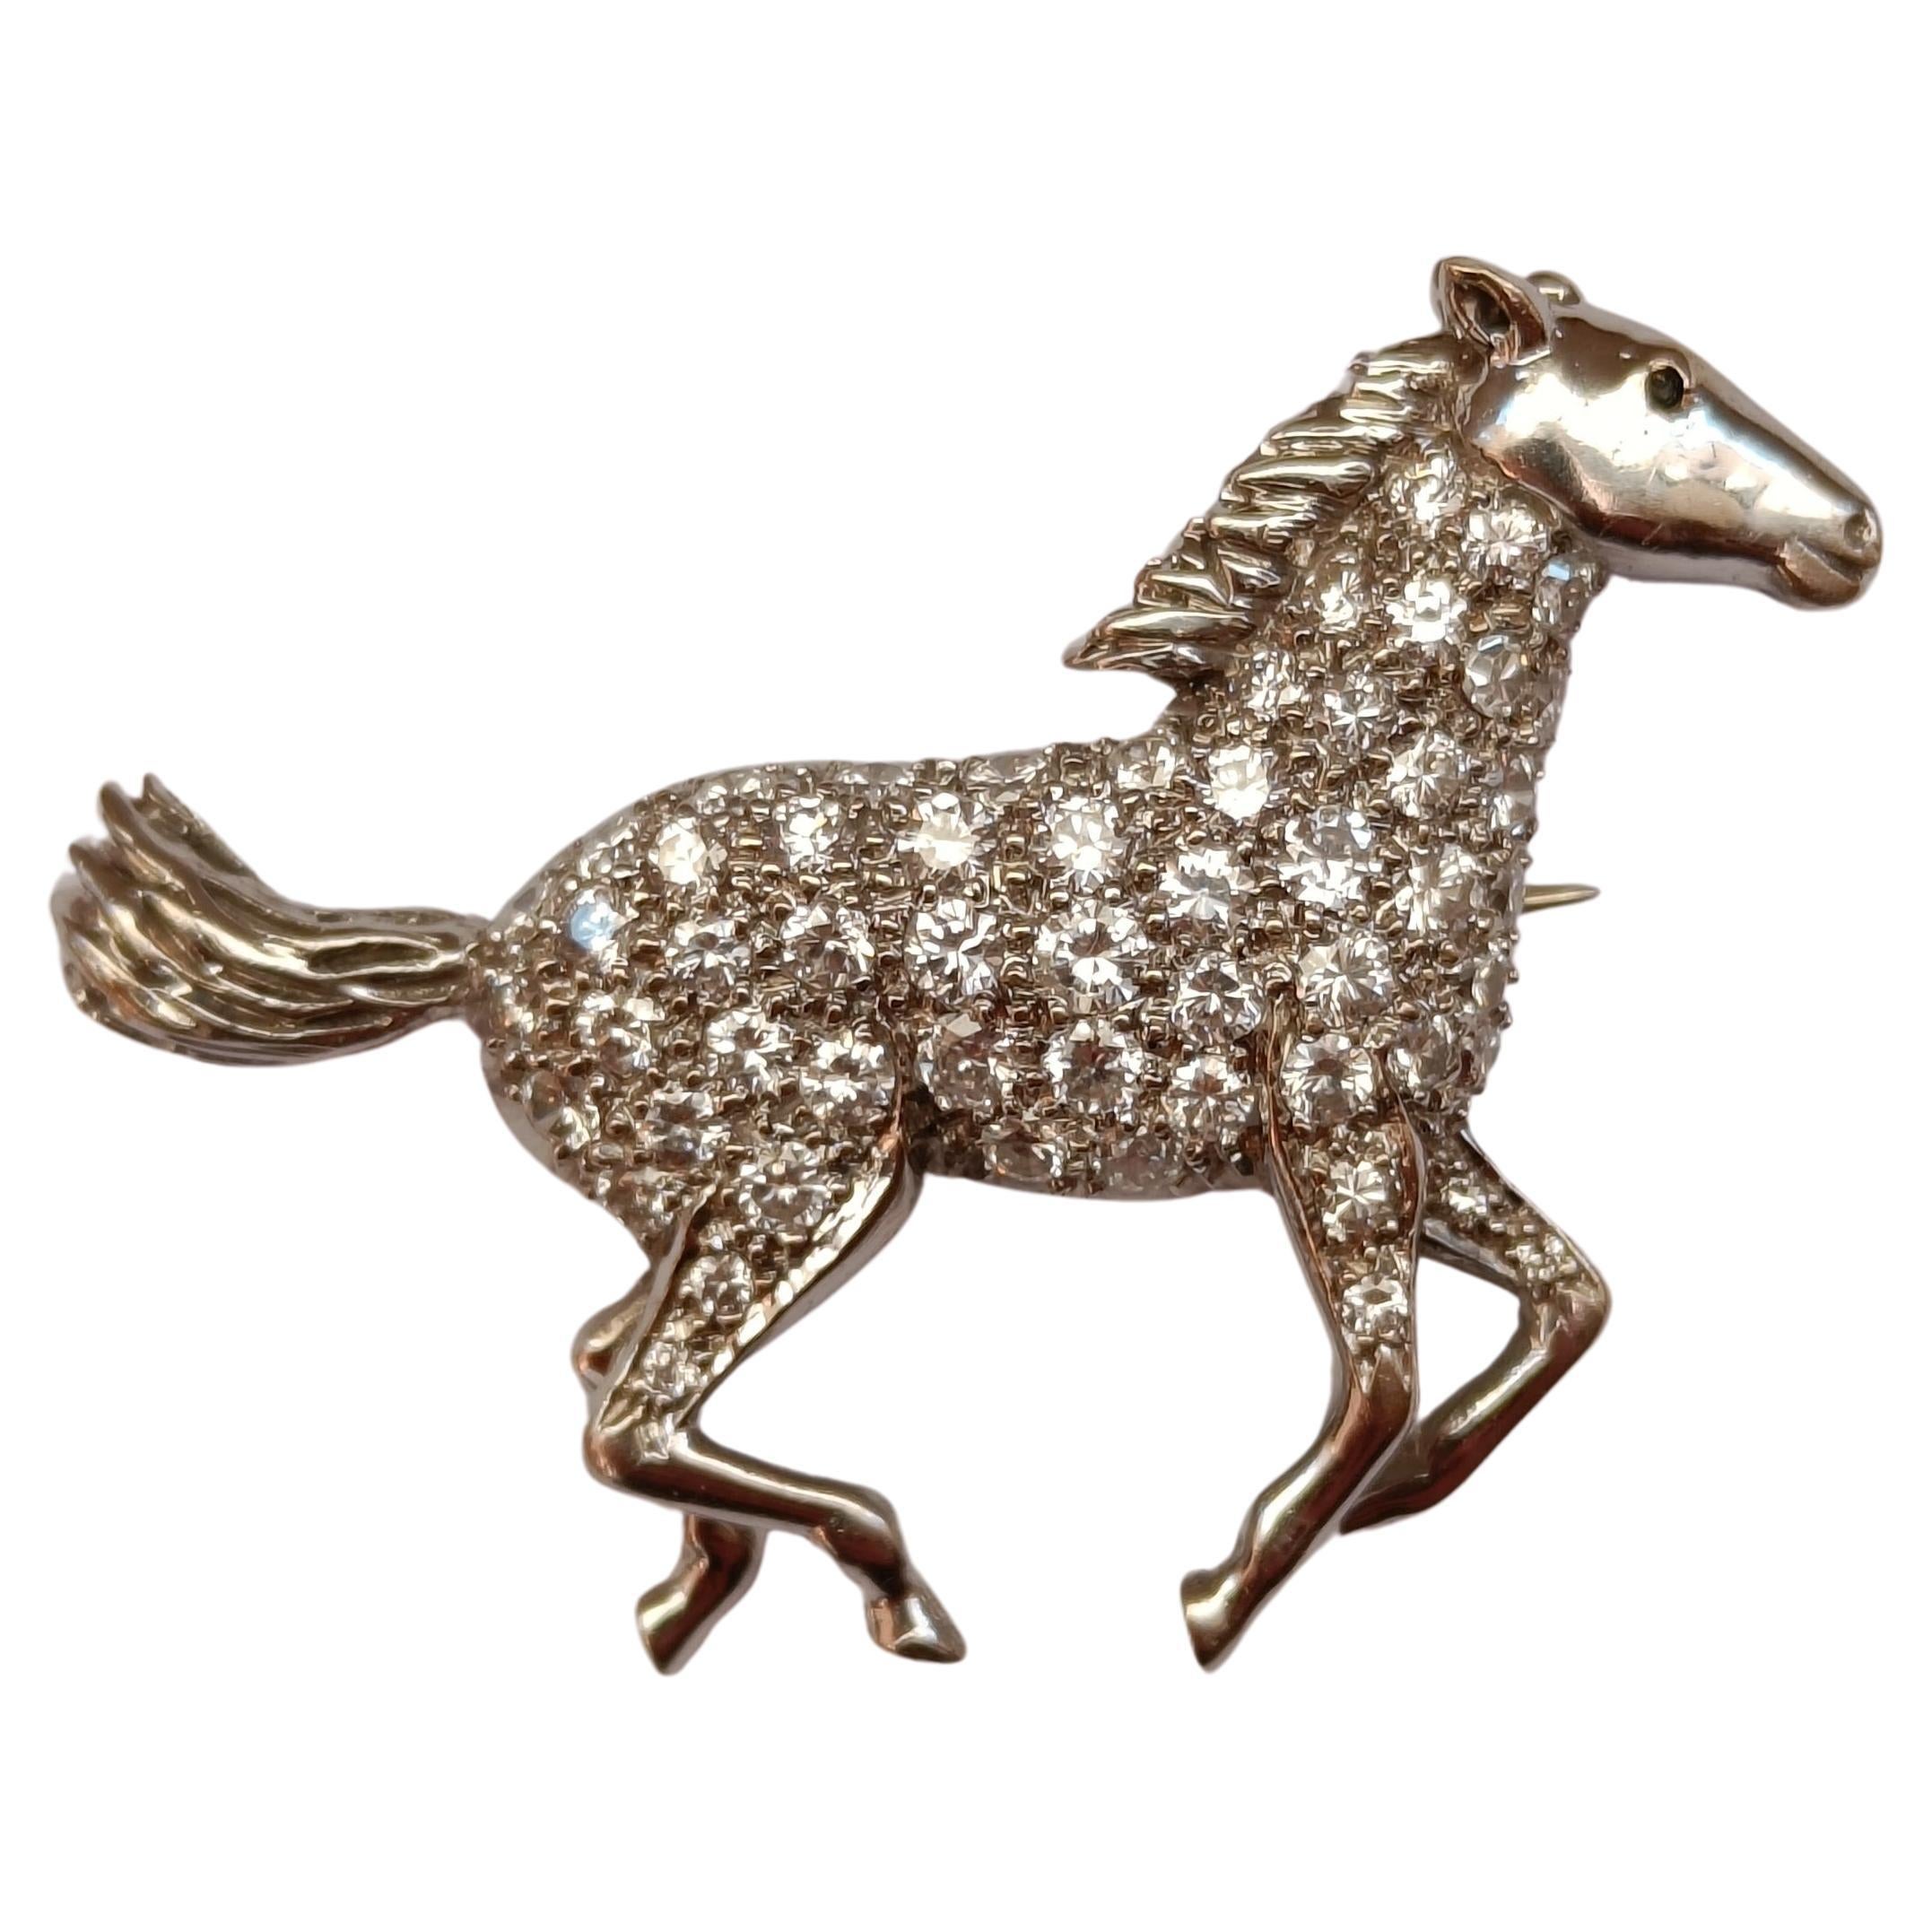 Pferdebrosche aus 18 Karat Gold mit Diamantpavé - E. Wolfe & Co., London